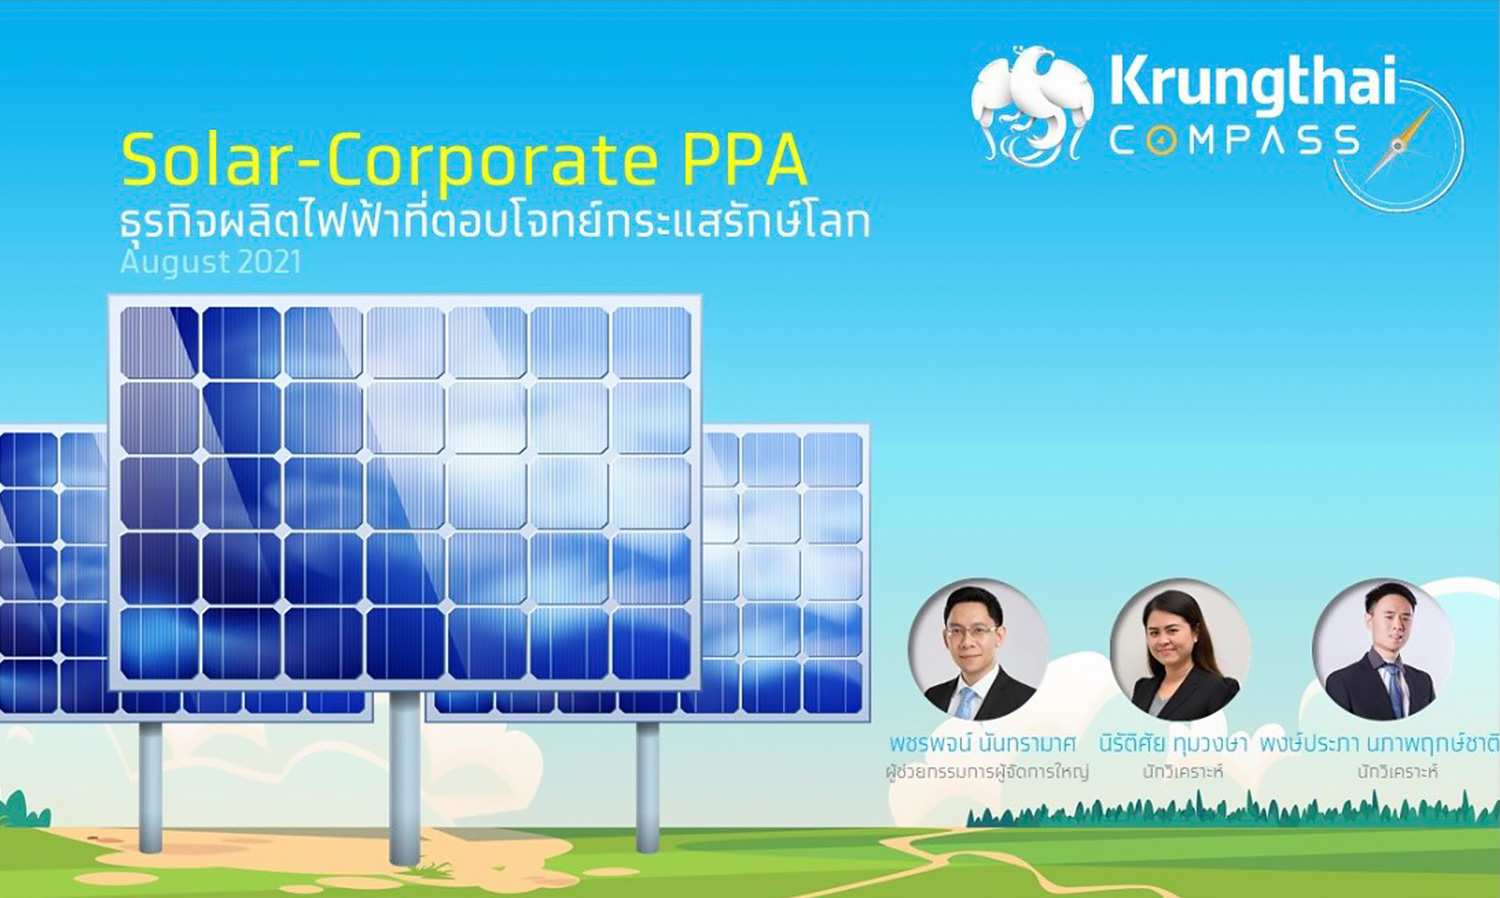 Krungthai COMPASS ชี้ Solar-Corporate PPA เป็น ธุรกิจผลิตไฟฟ้า ที่ตอบโจทย์กระแสรักษ์โลก